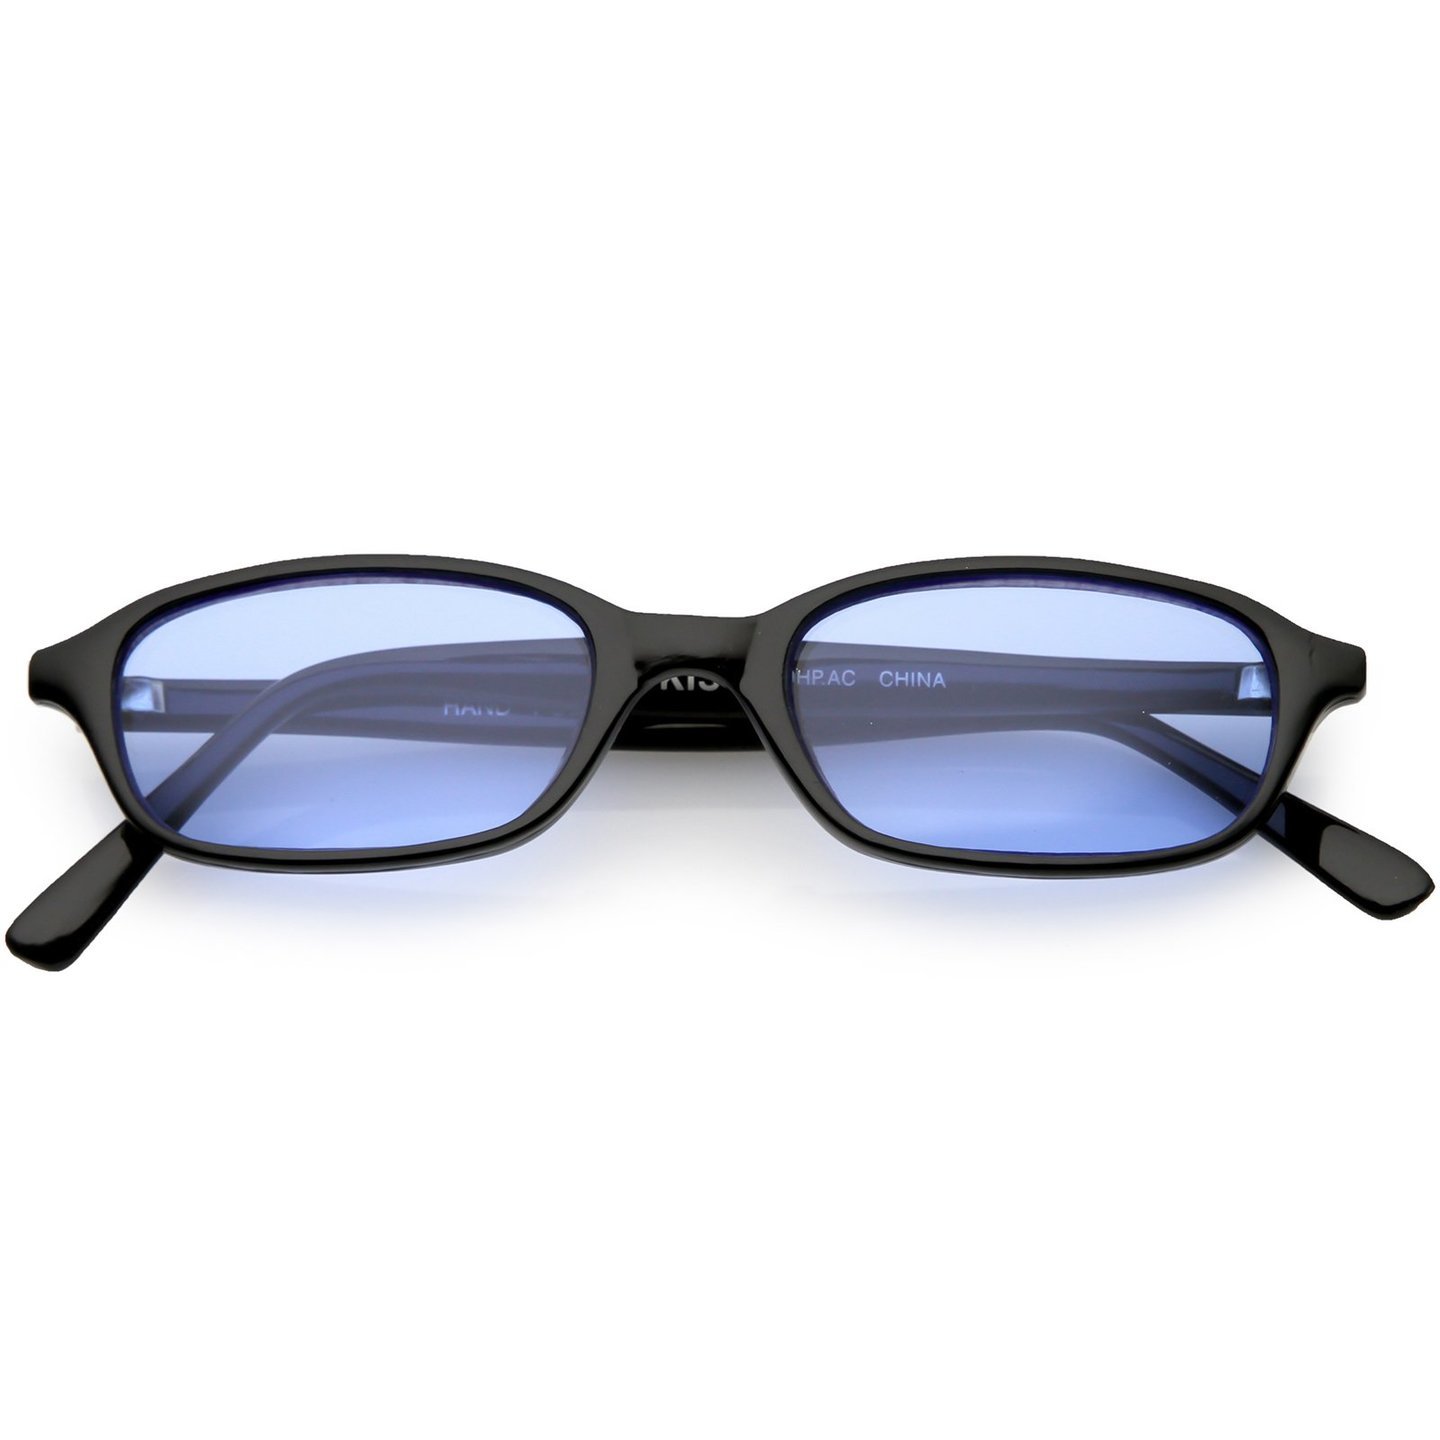 Full Black Rimmed Blue Colored Sunglasses